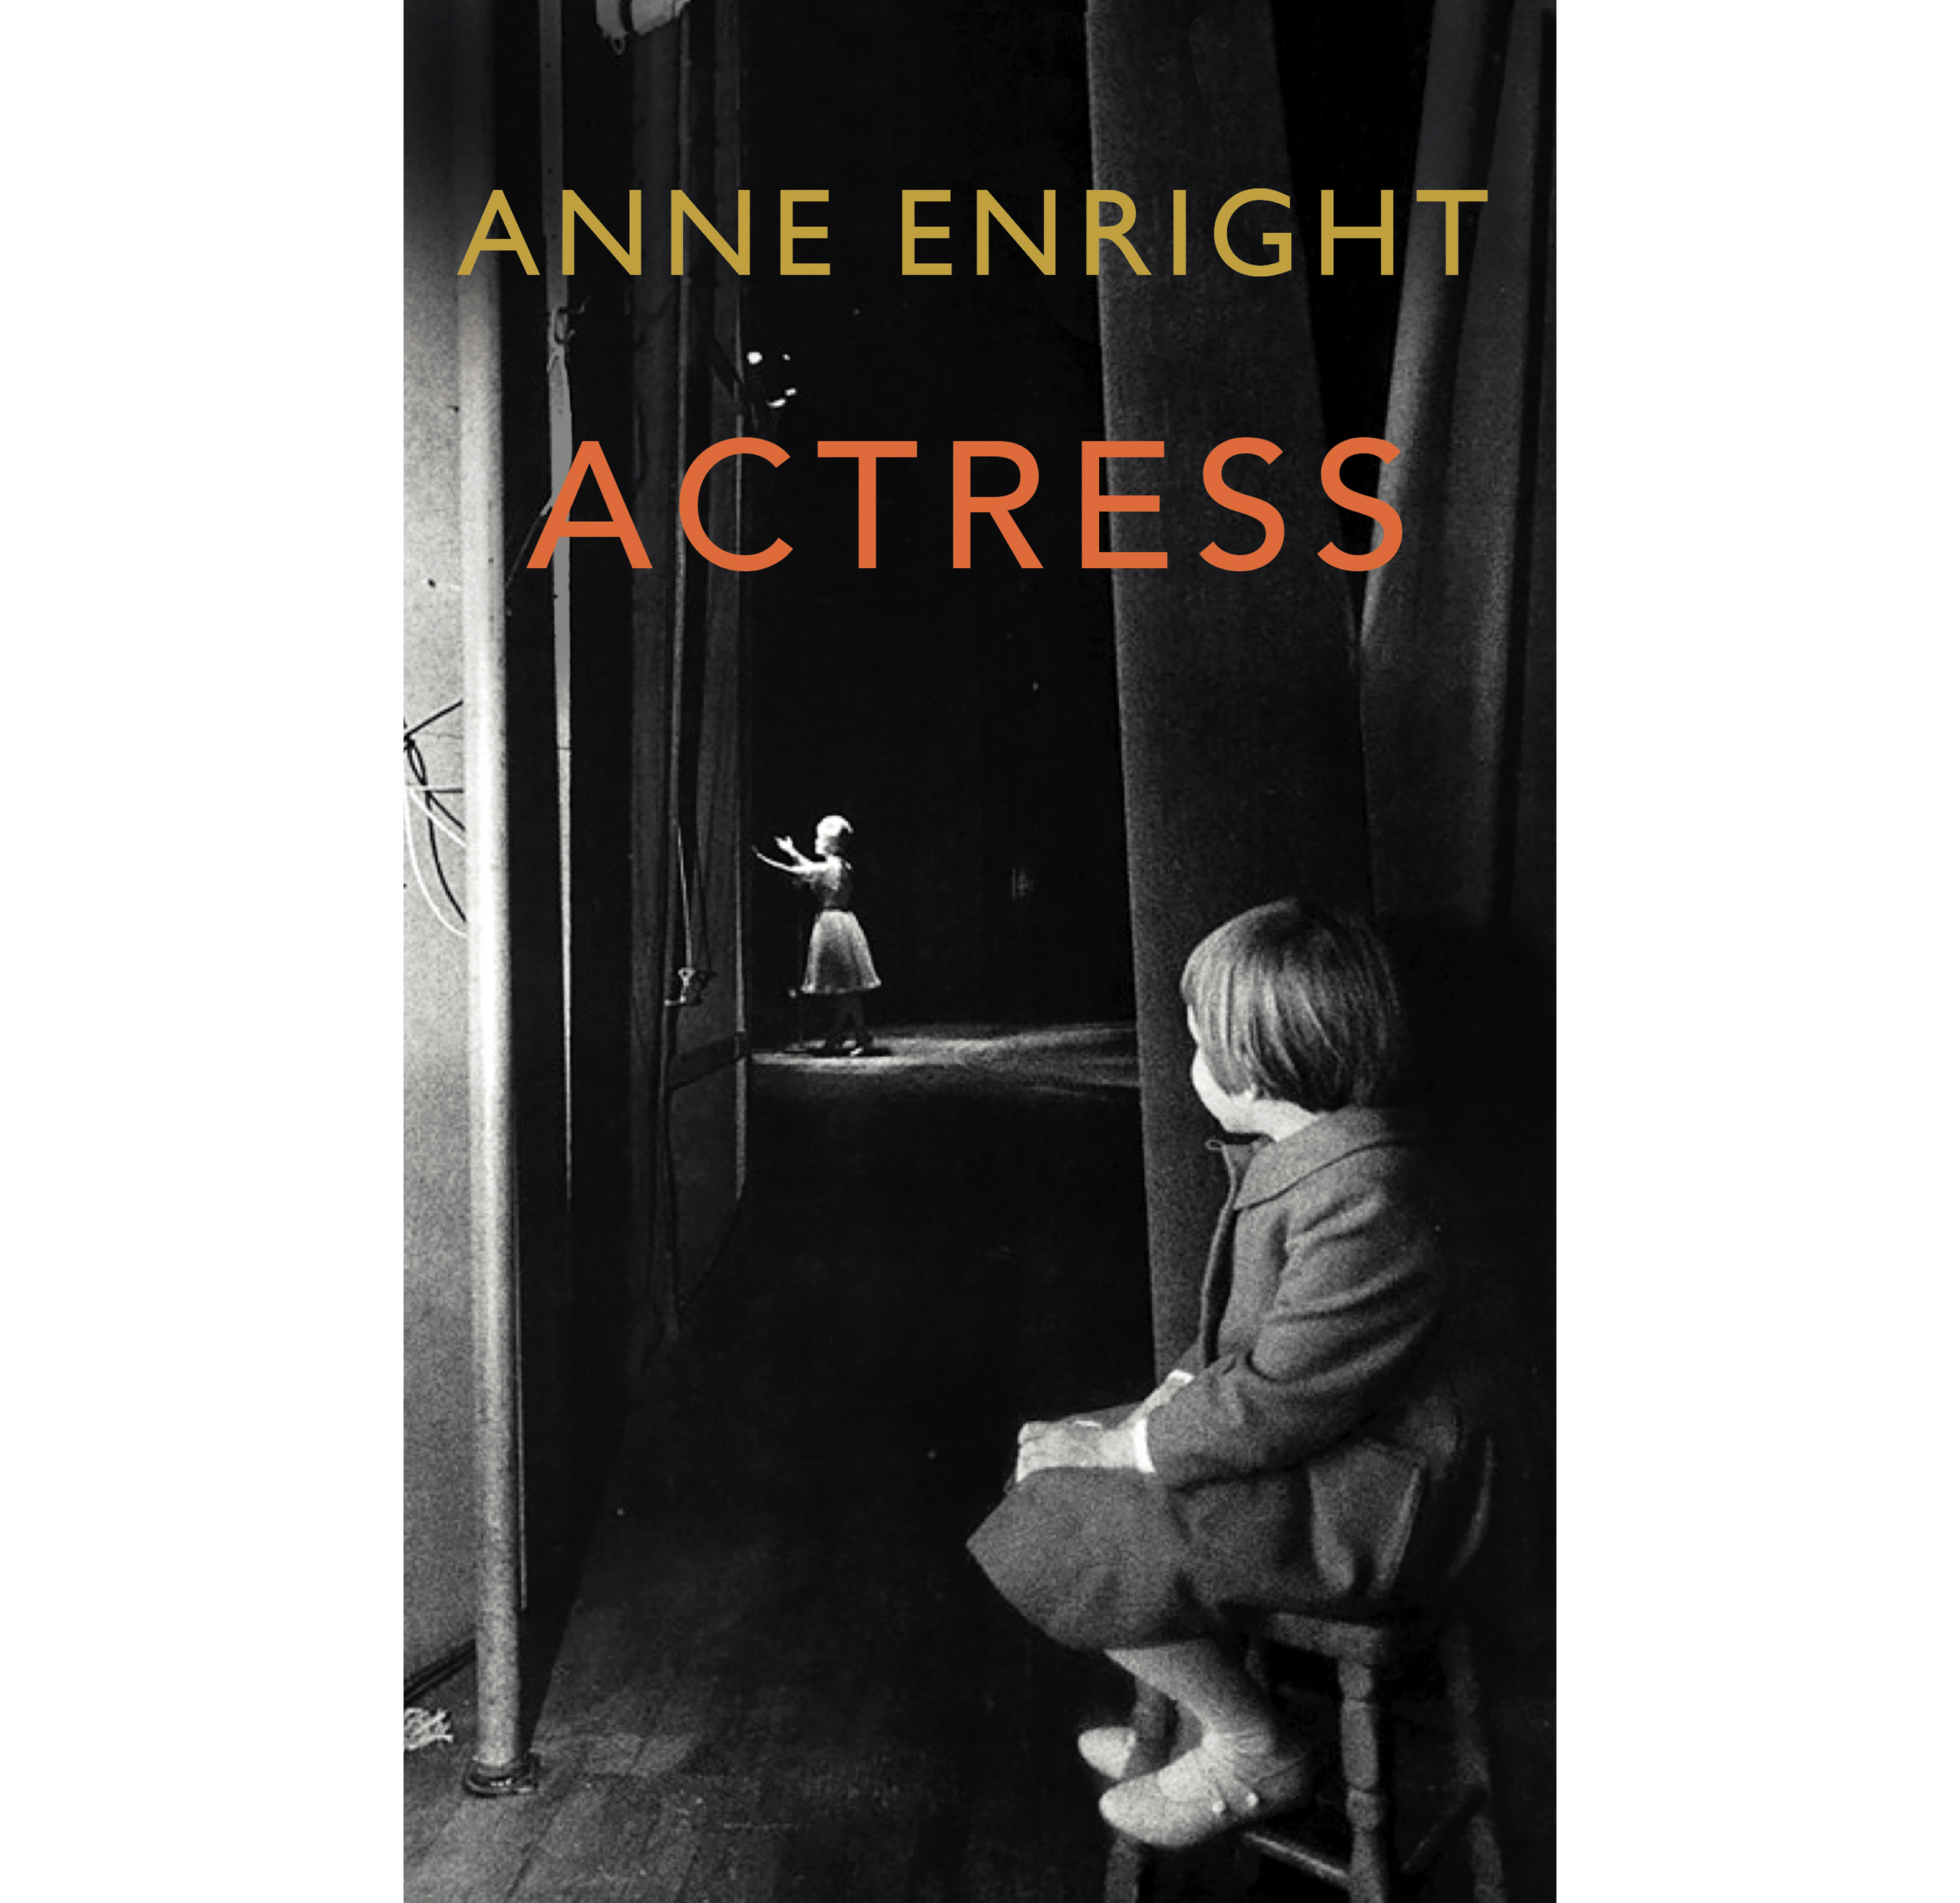 Actress by Anne Enright (Jonathan Cape/PA)